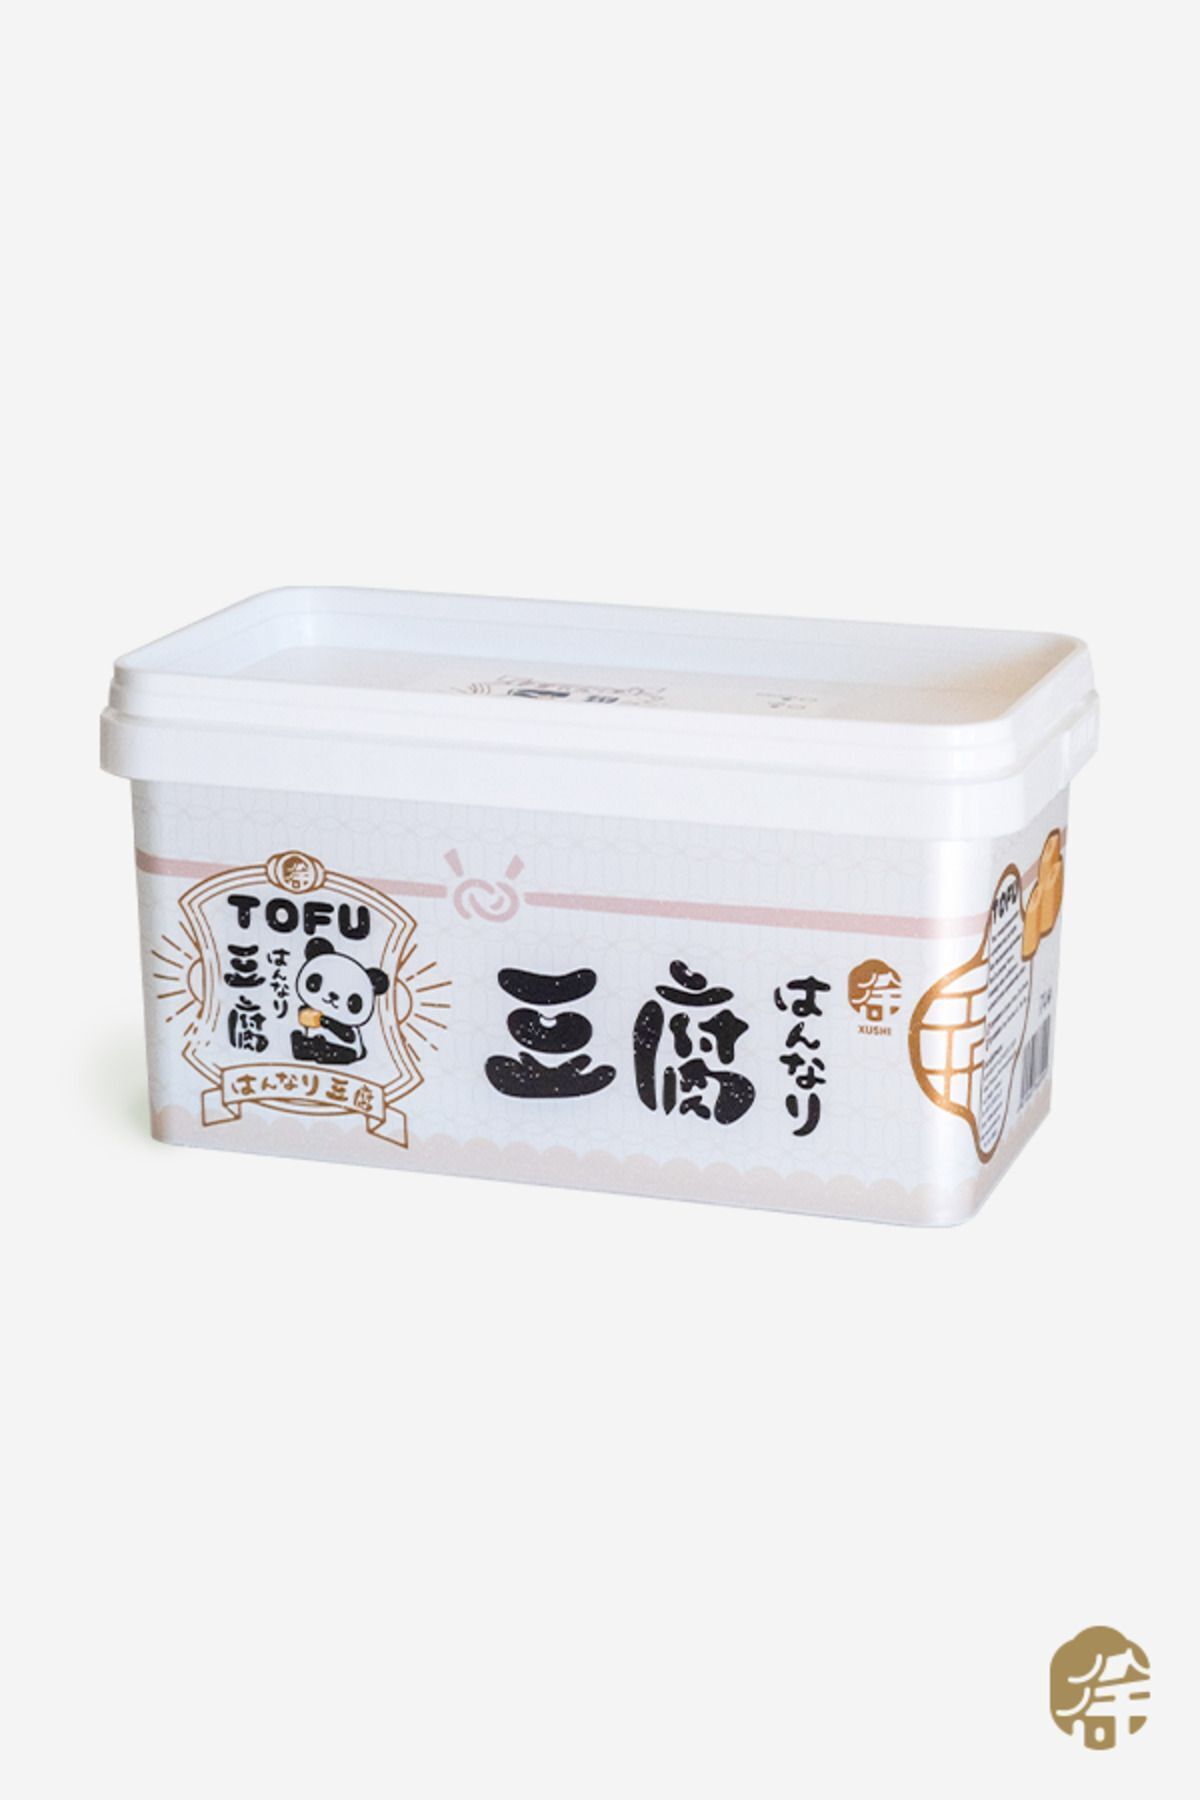 XUSHI GIDA Taze Yumuşak Tofu ( Fresh Soft Tofu) - 1000g